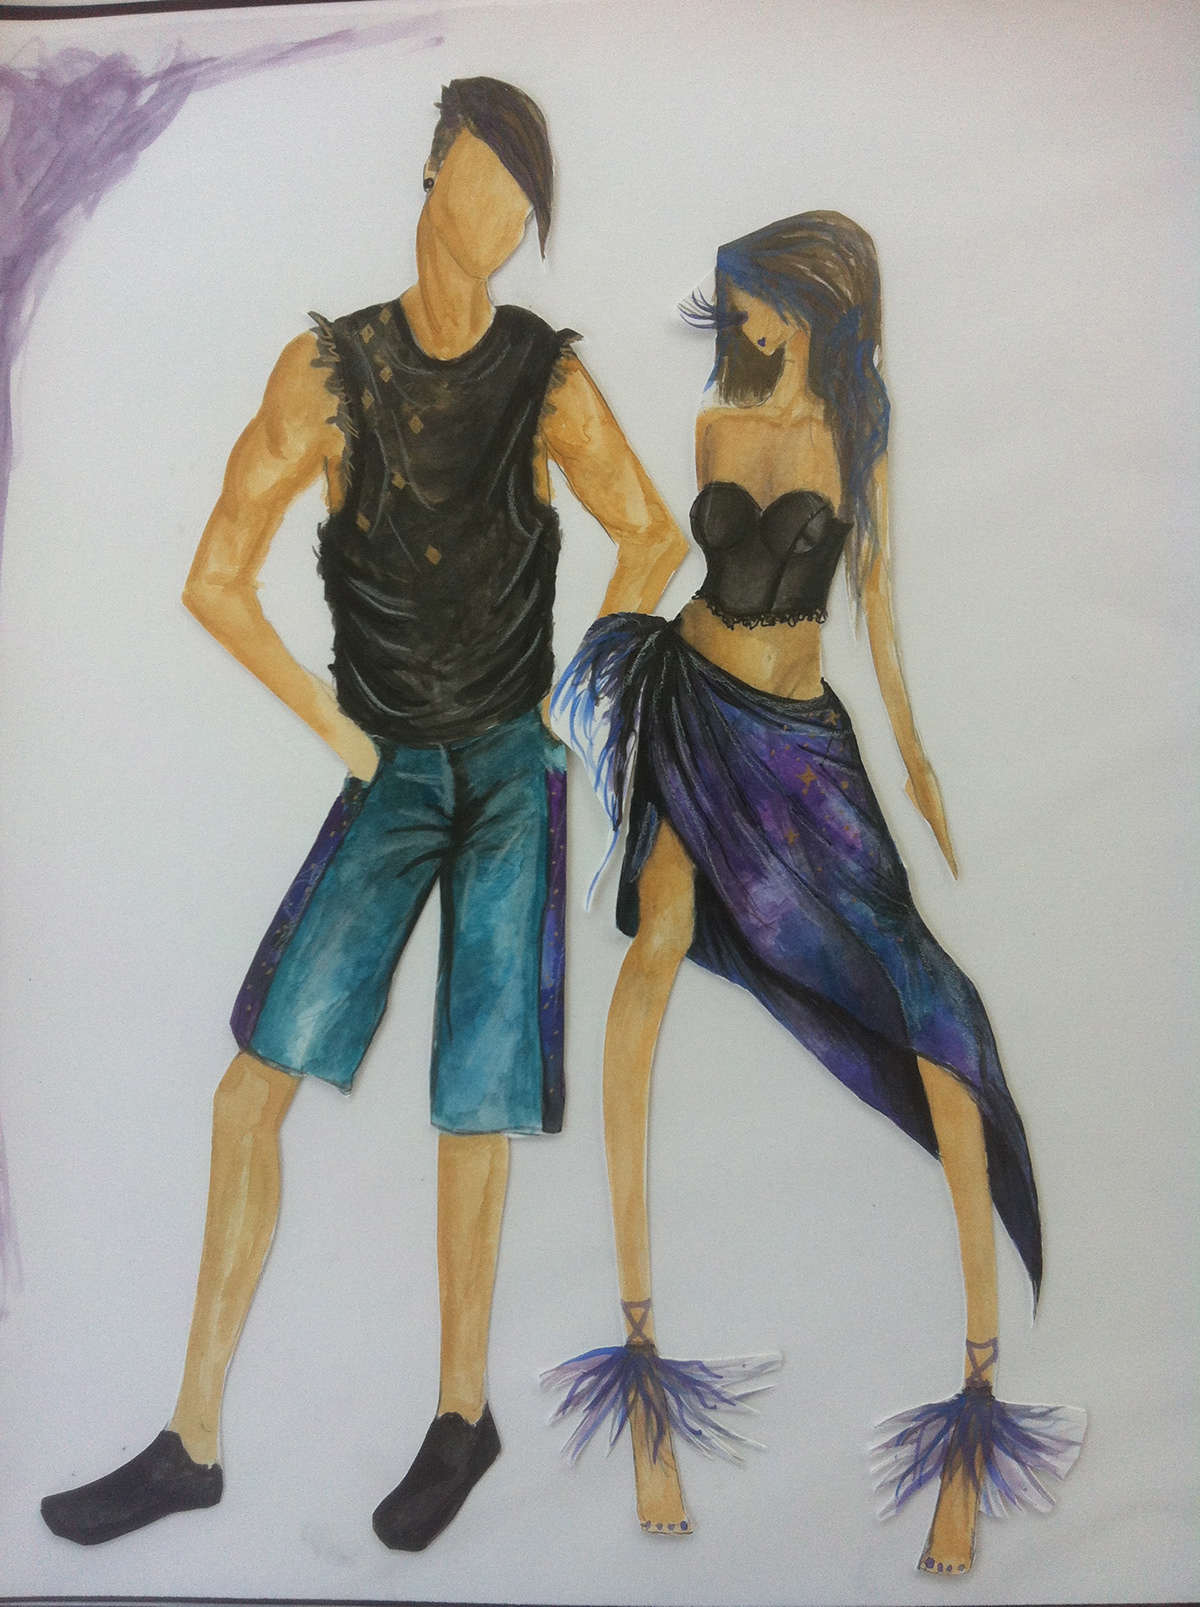 #Menswear  #womenswear #lifestyle #couples #collection #daytonight #illustration #blue   #purple #sportswear   #stracrossed #Lovers #Design #Watercolor #fashionillustration